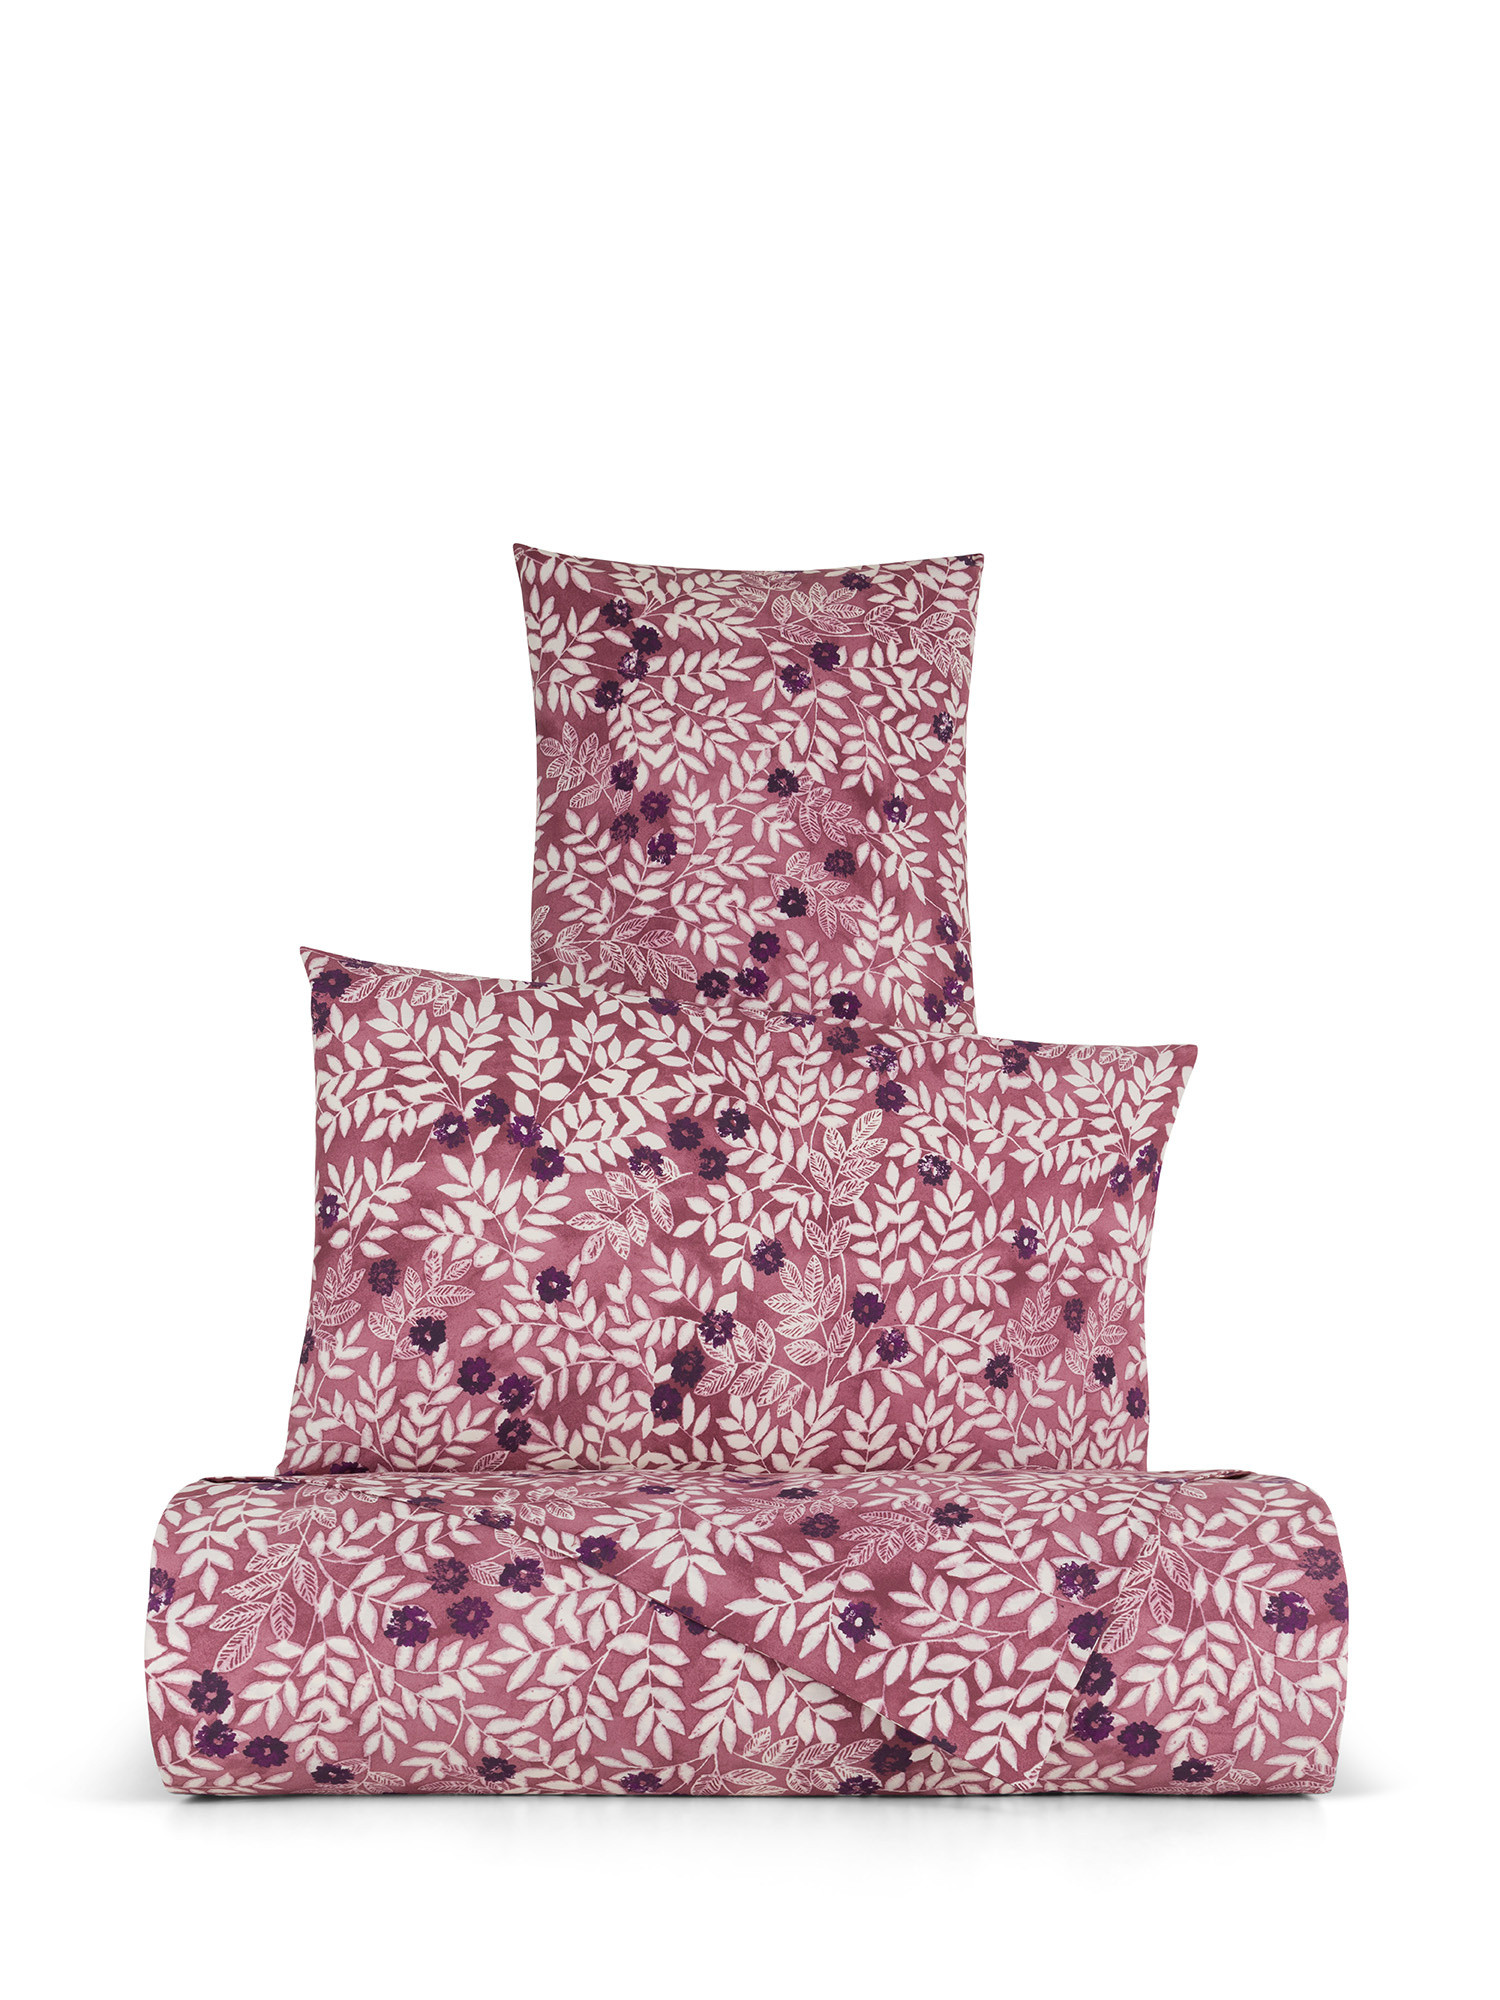 Floral patterned cotton percale sheet set, Pink, large image number 0